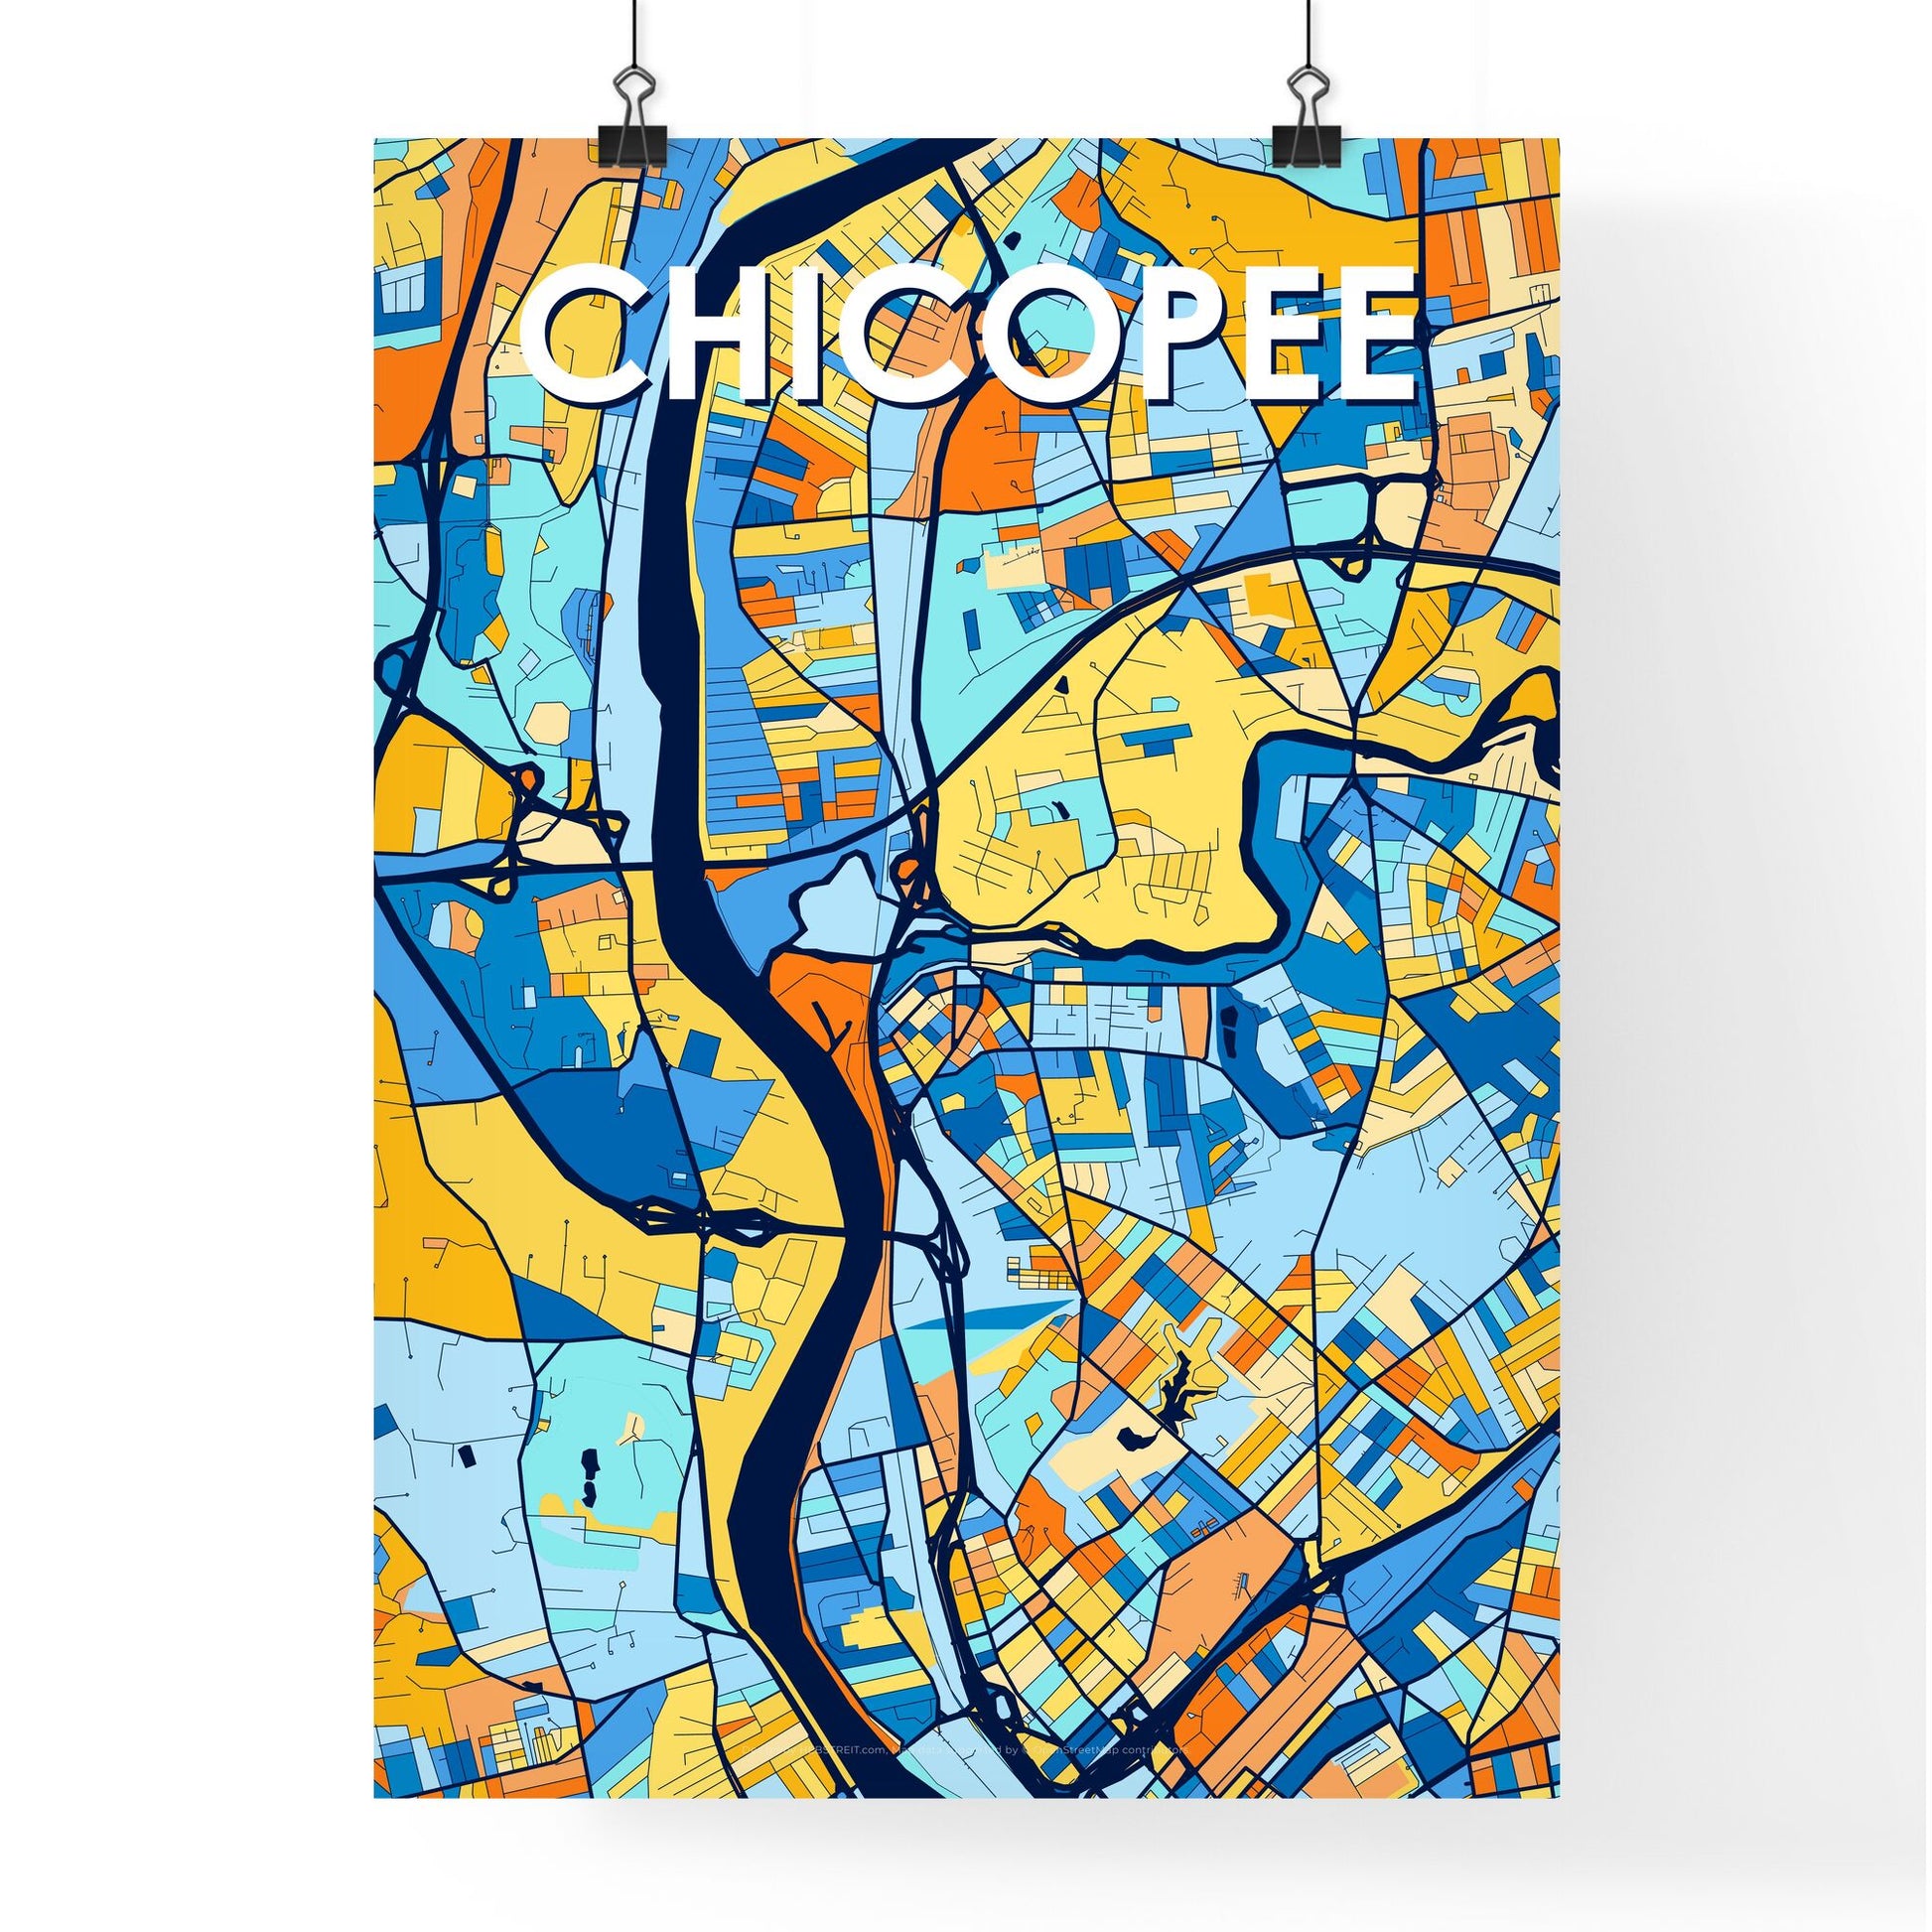 CHICOPEE MASSACHUSETTS Vibrant Colorful Art Map Poster Blue Orange